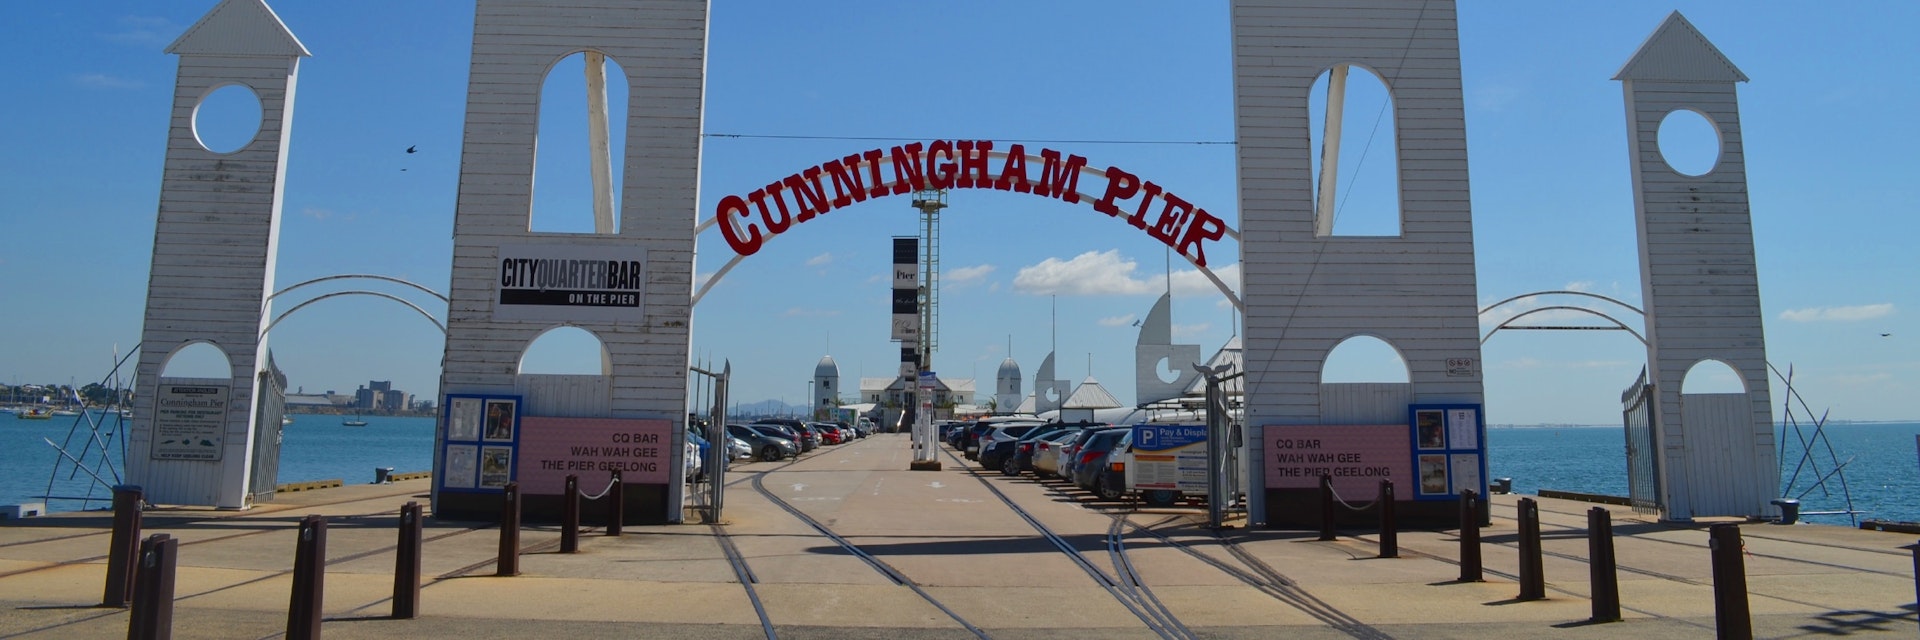 Cunningham Pier entry